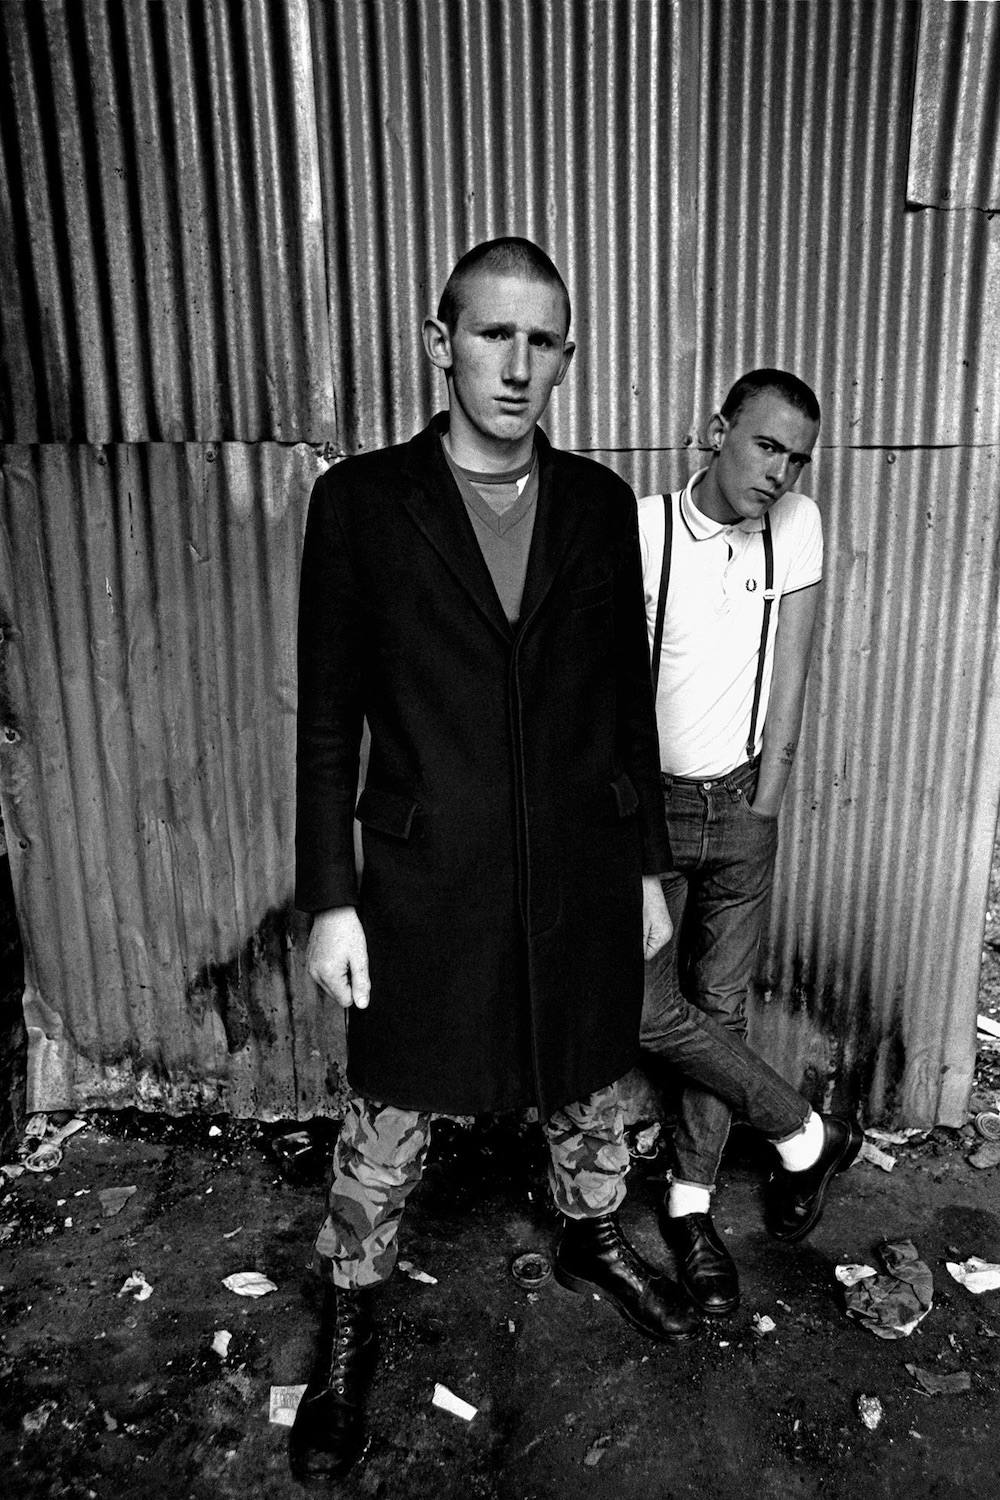 Two anti-racist skinheads pose for the camera, Petticoat Lane, 1979, Whitechapel.